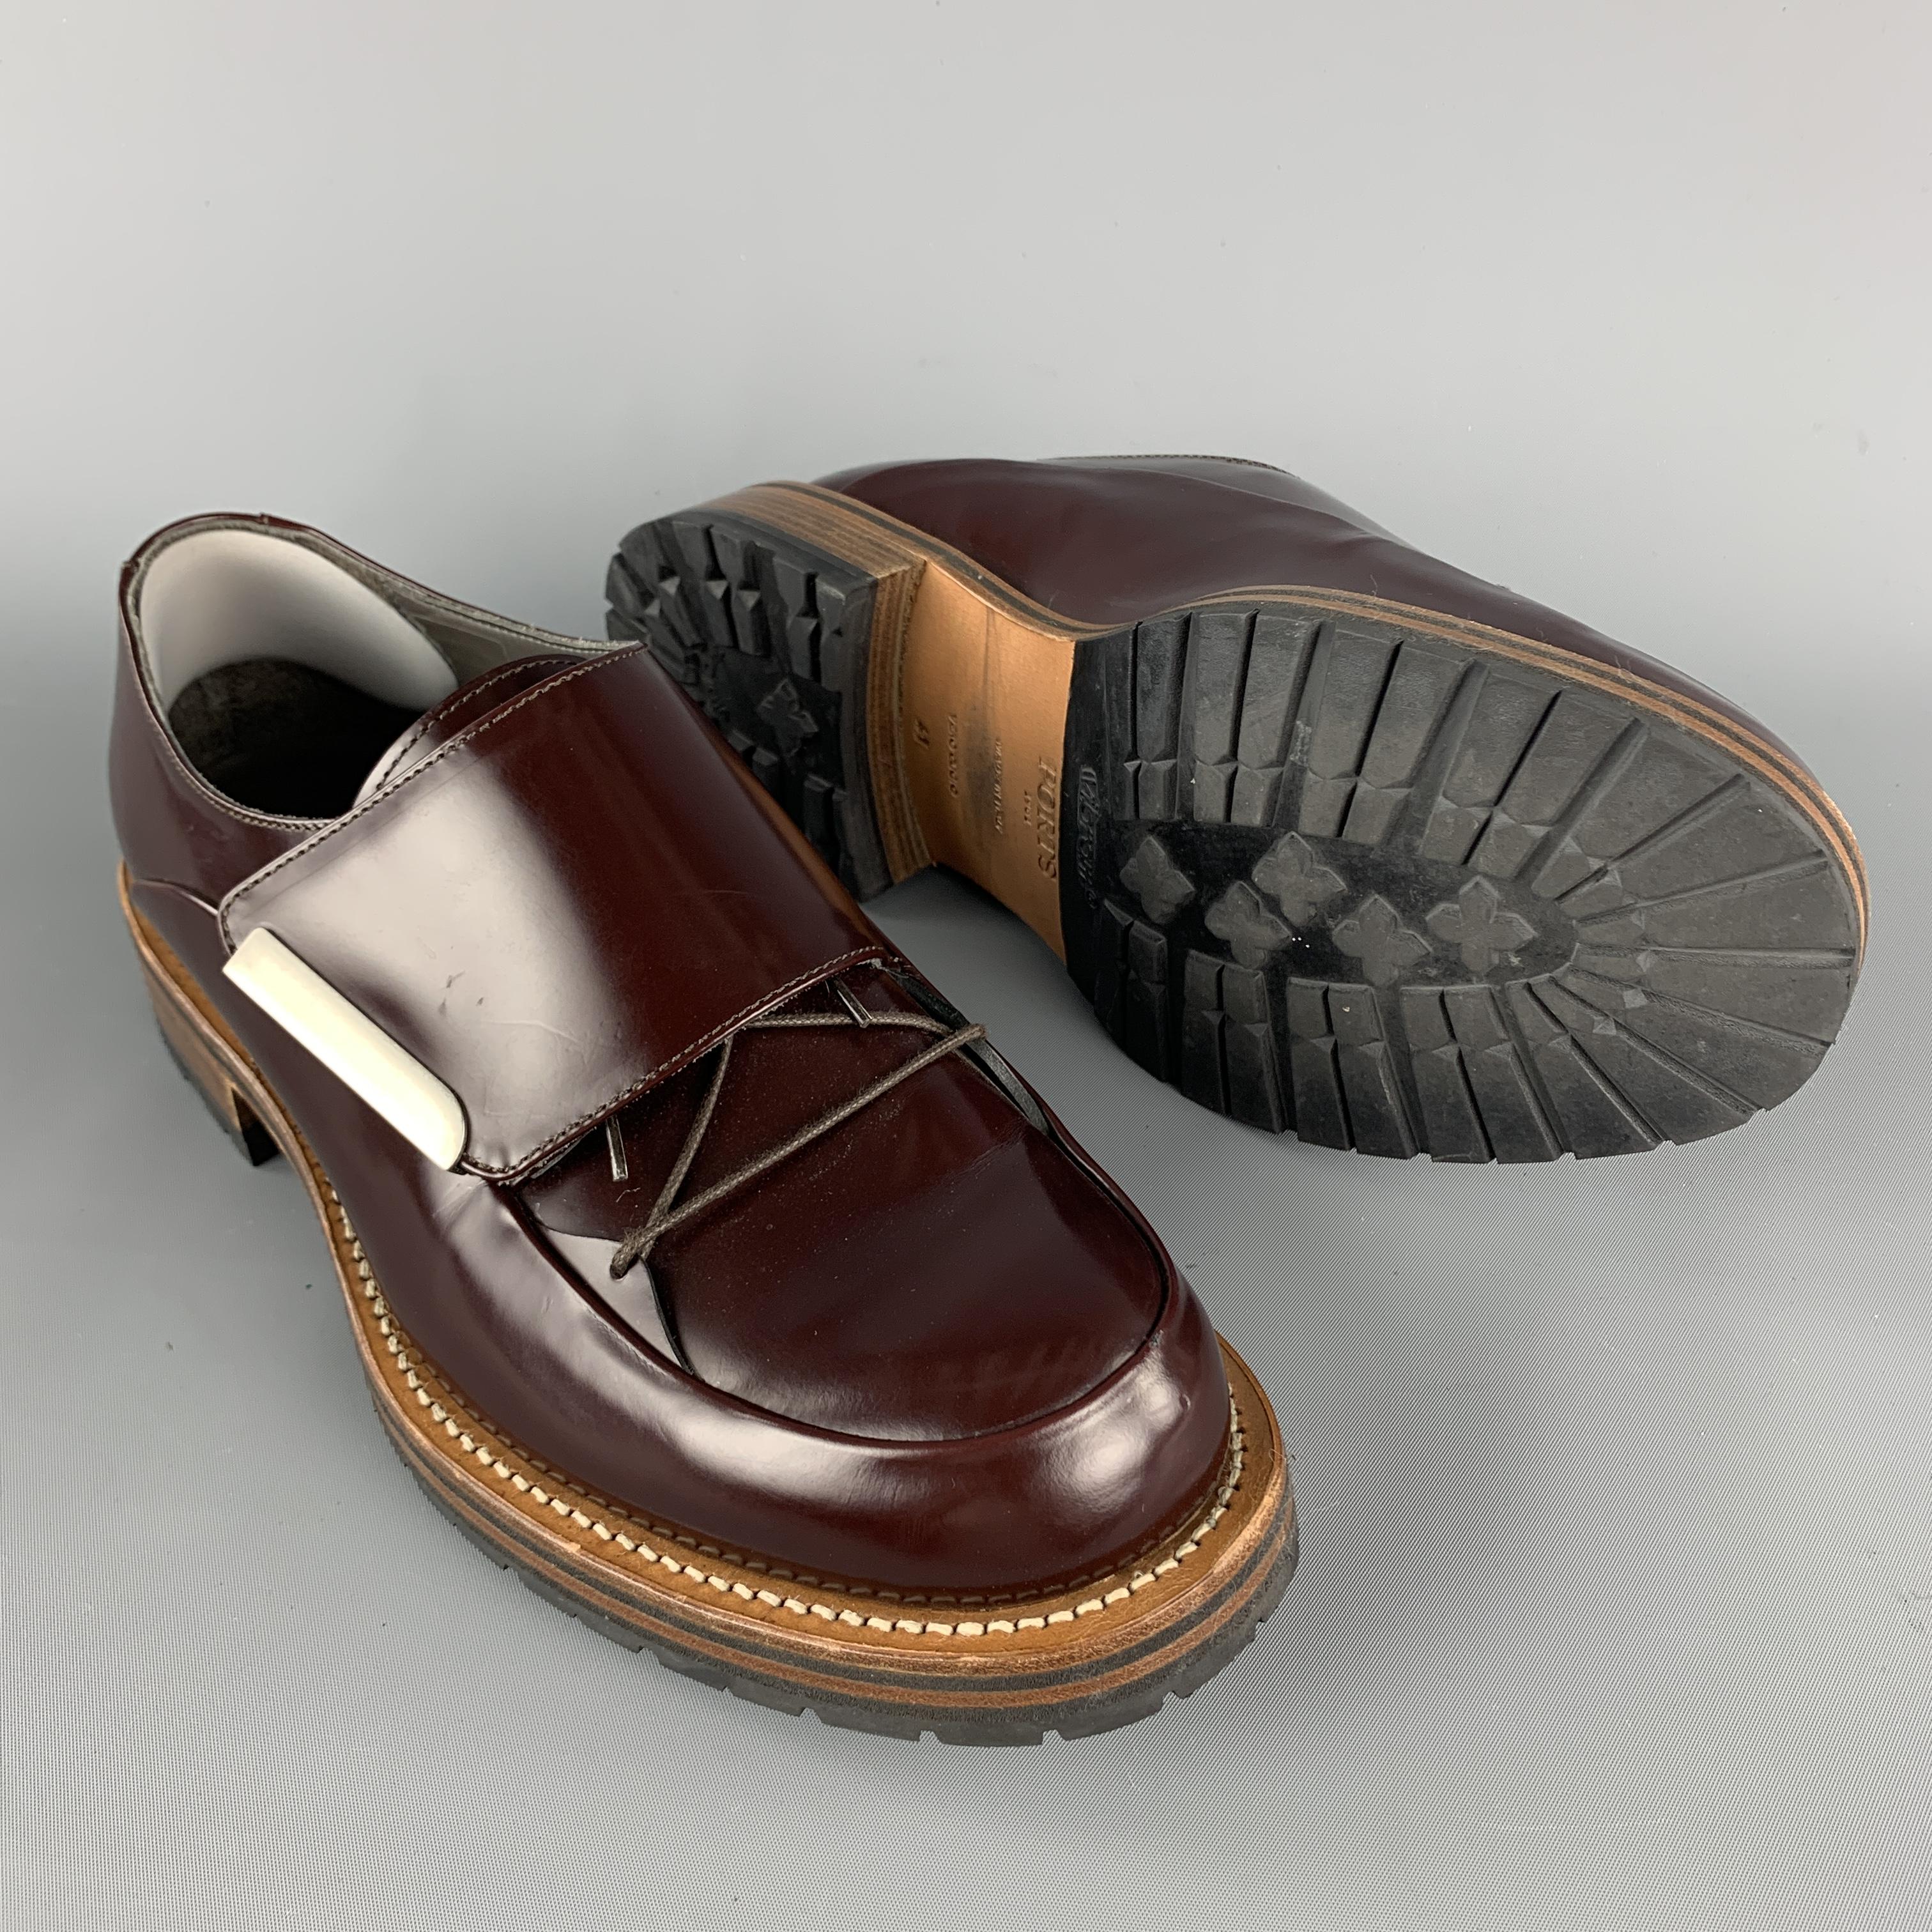 ports 1961 sandals